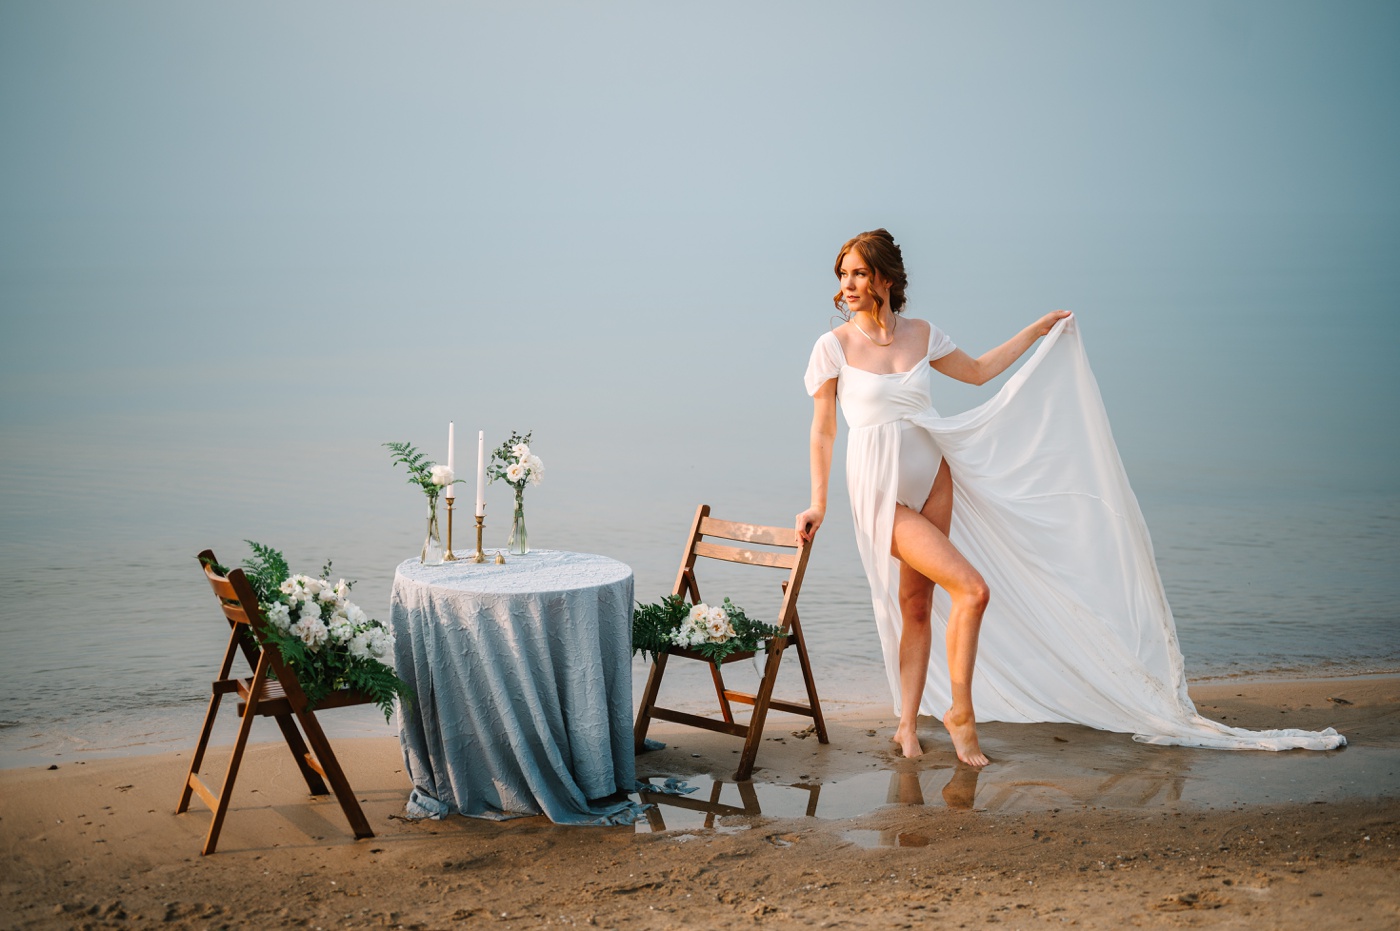 Bridal session at Miller Beach on Lake Michigan